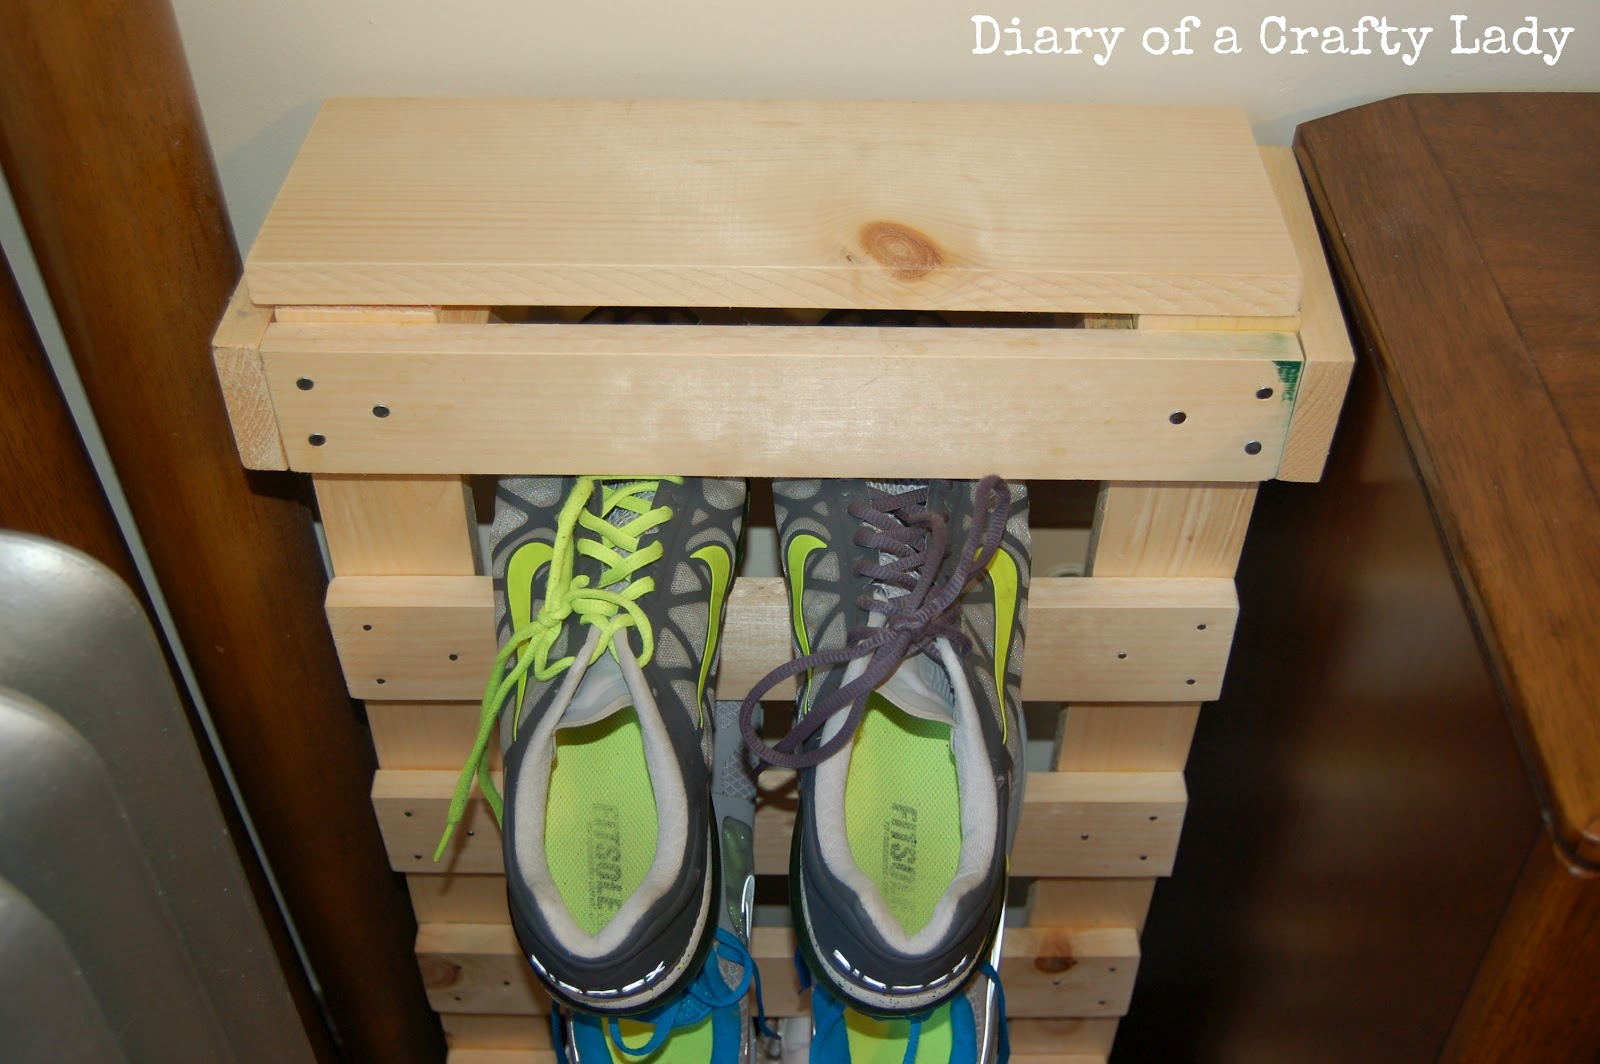 DIY Update: The Ladder Shoe Shelf